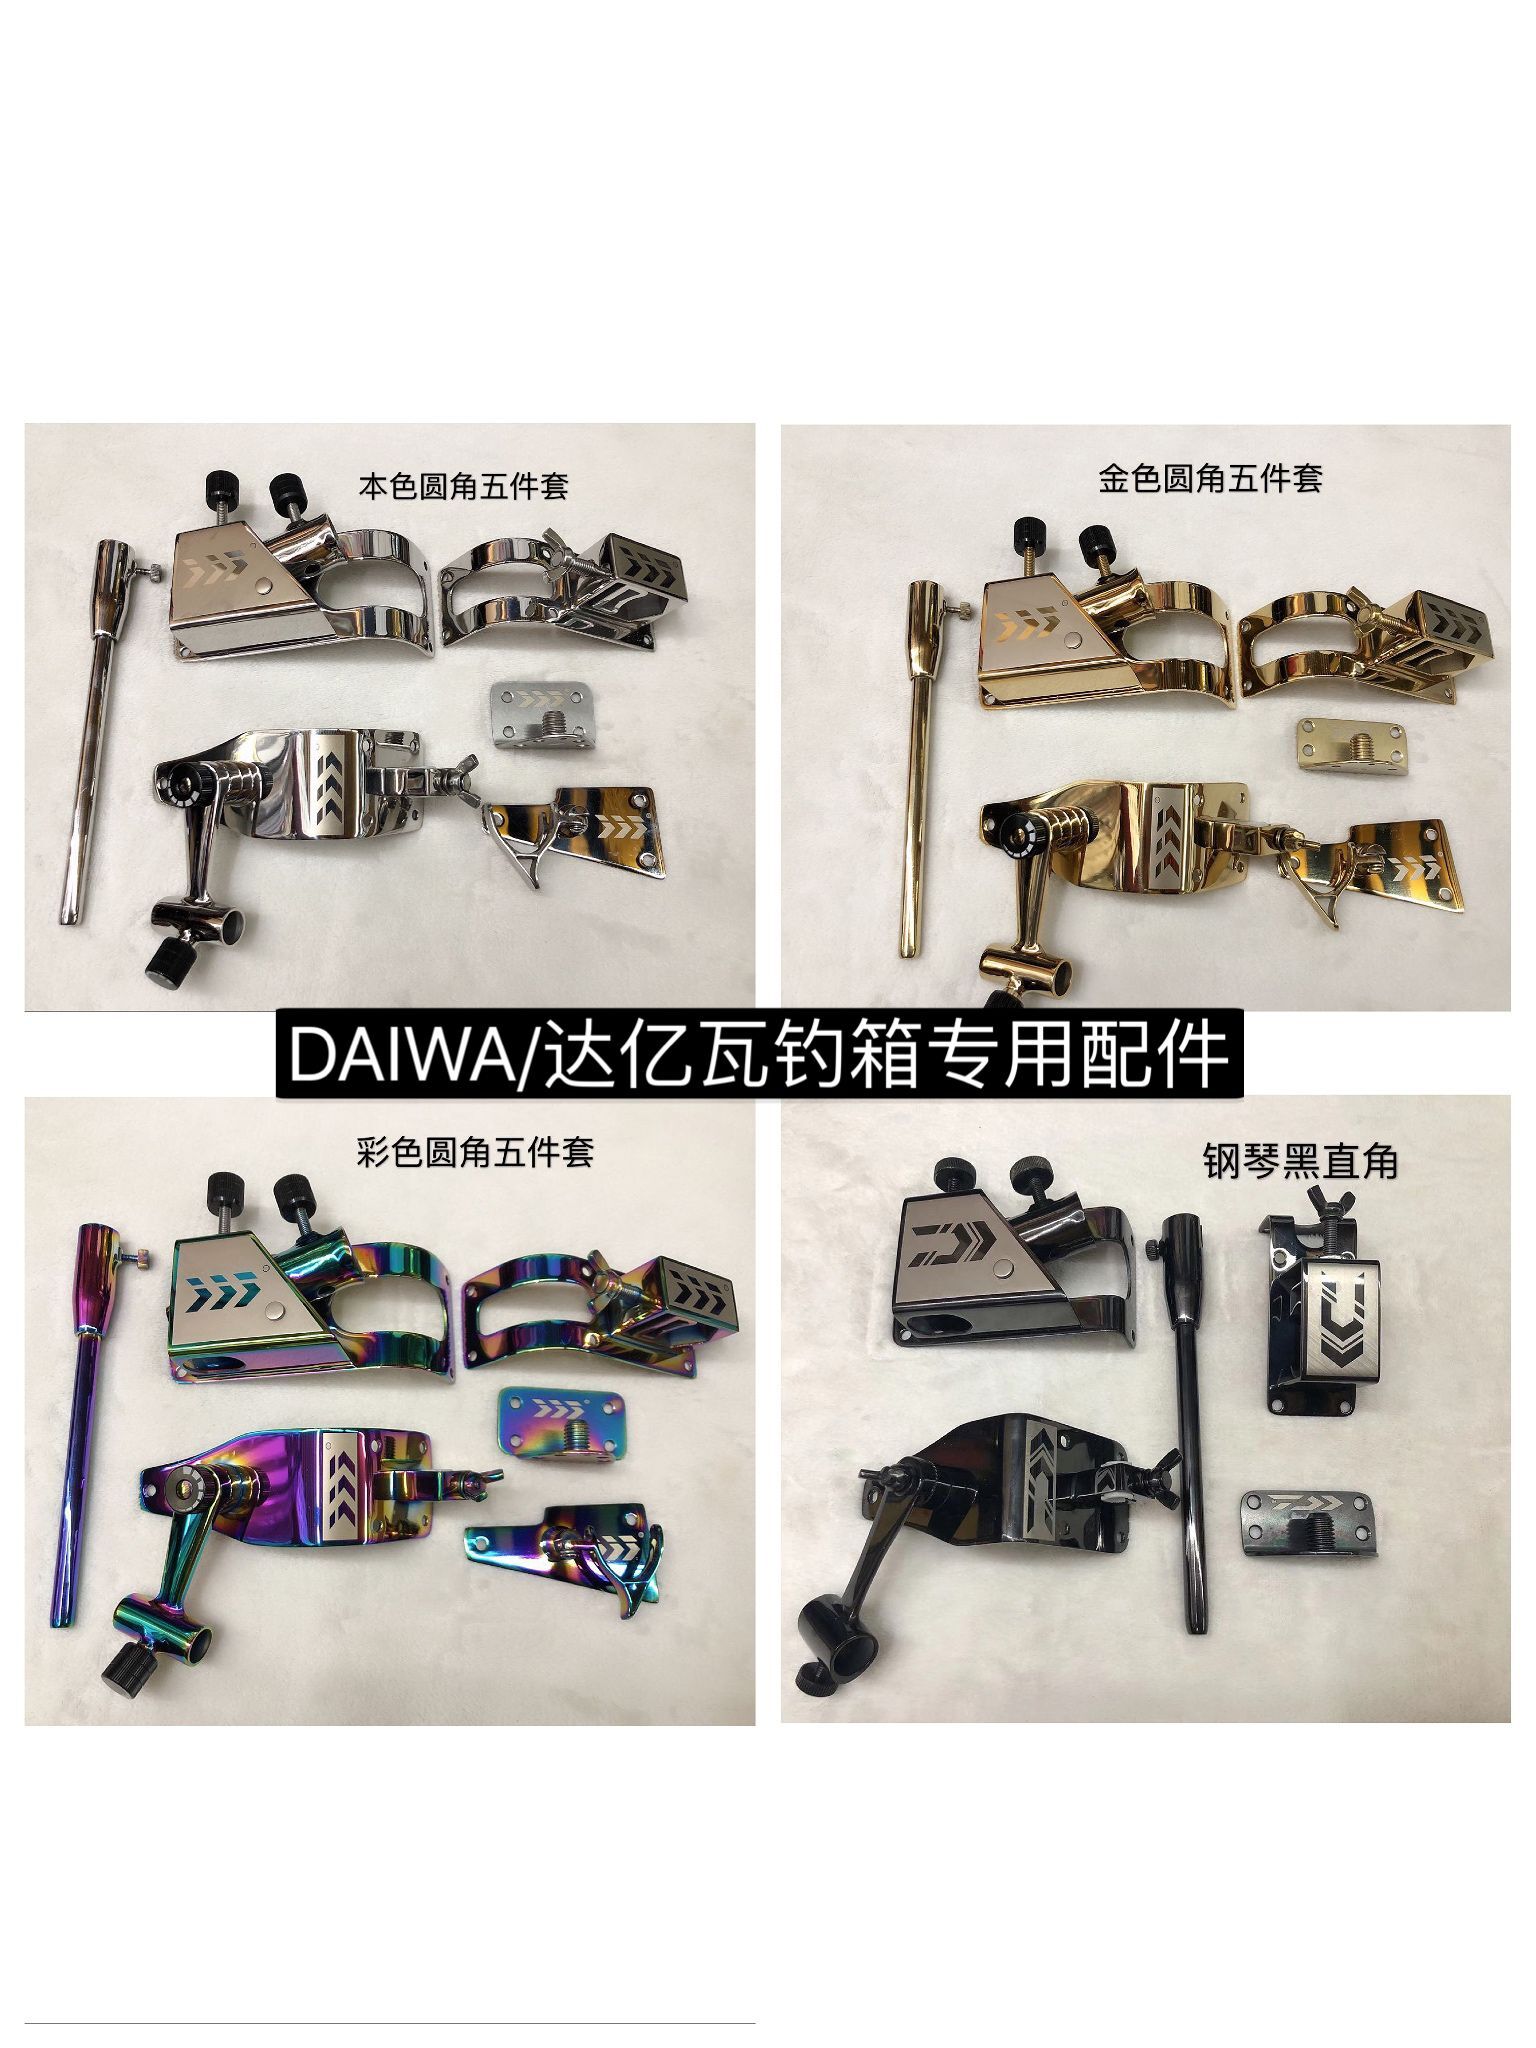 Daiwa釣魚傘新品 Daiwa釣魚傘價格 Daiwa釣魚傘包郵 品牌 淘寶海外